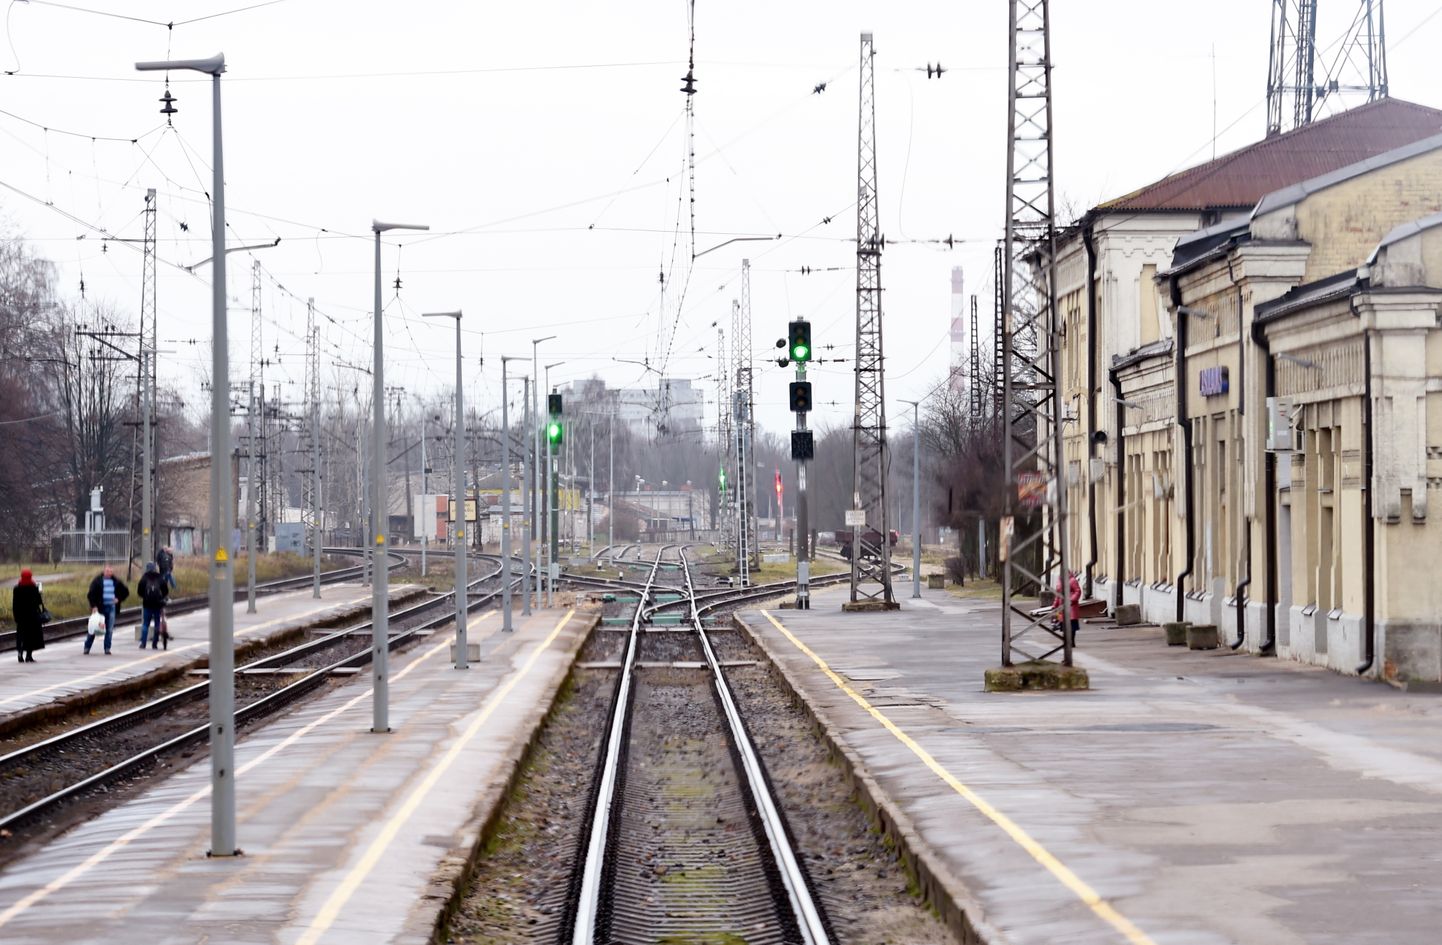 Dzelzceļa stacija "Zasulauks".